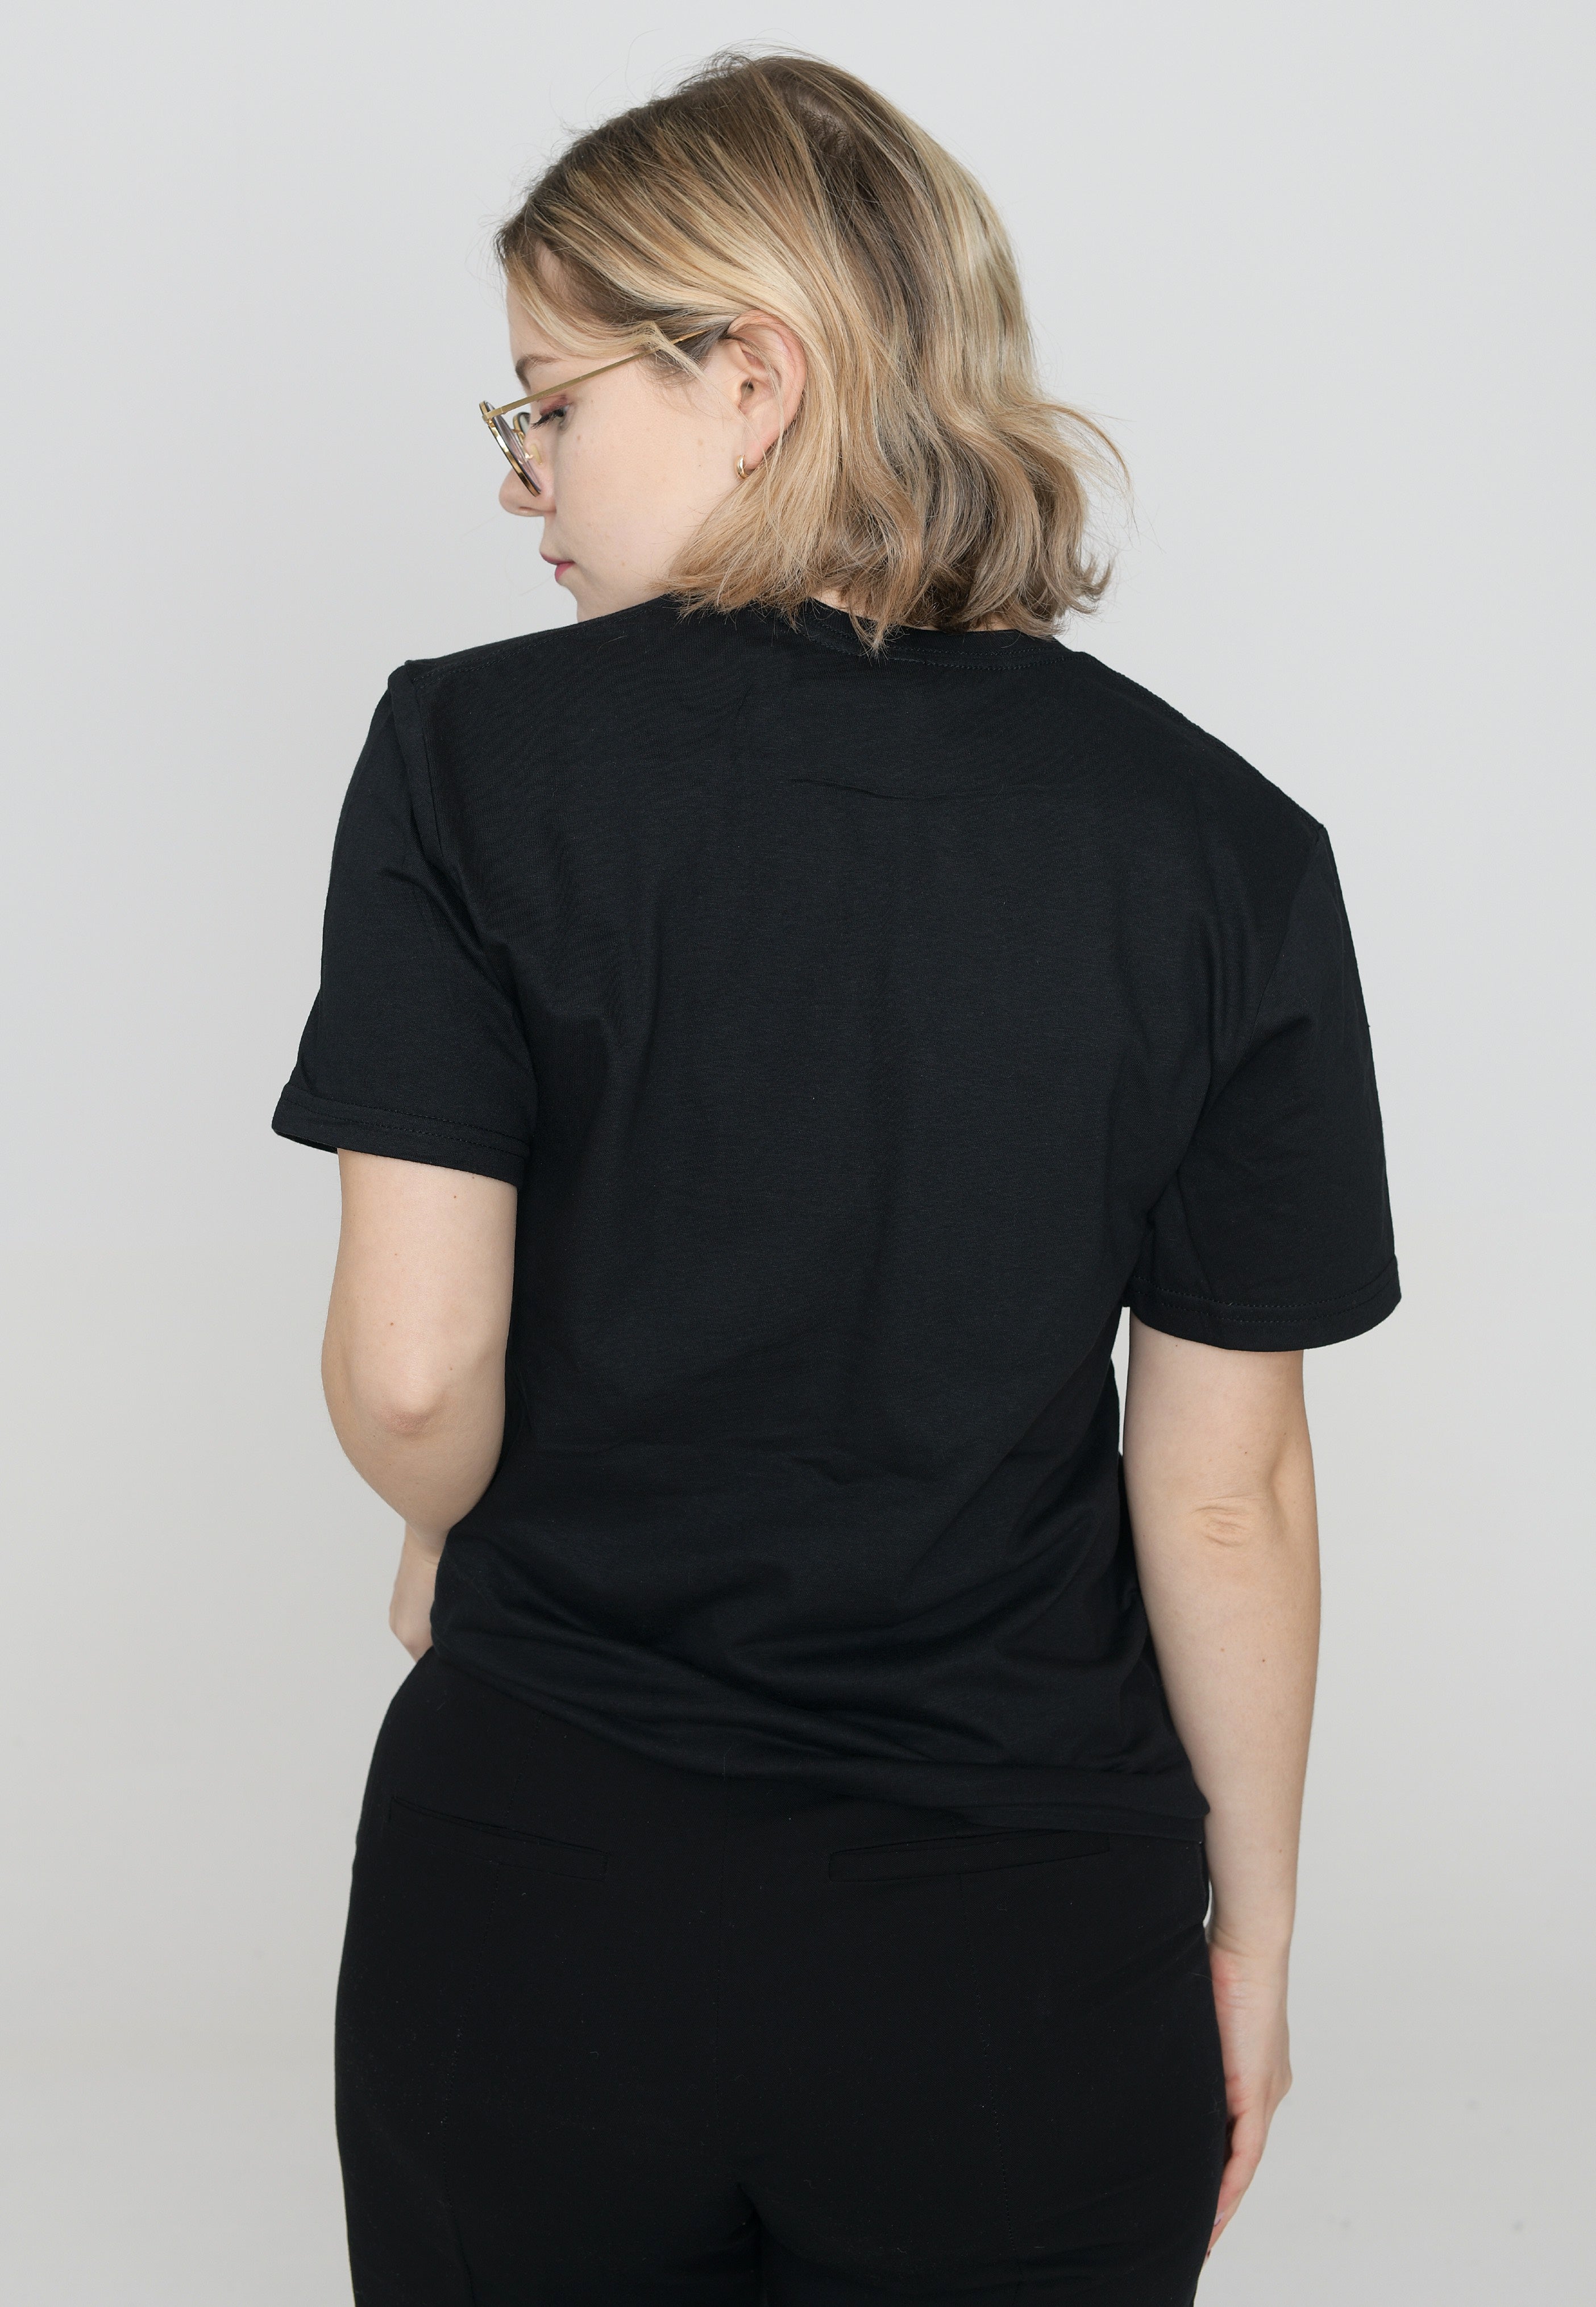 Callejon - MMXXII Skull - T-Shirt | Women-Image